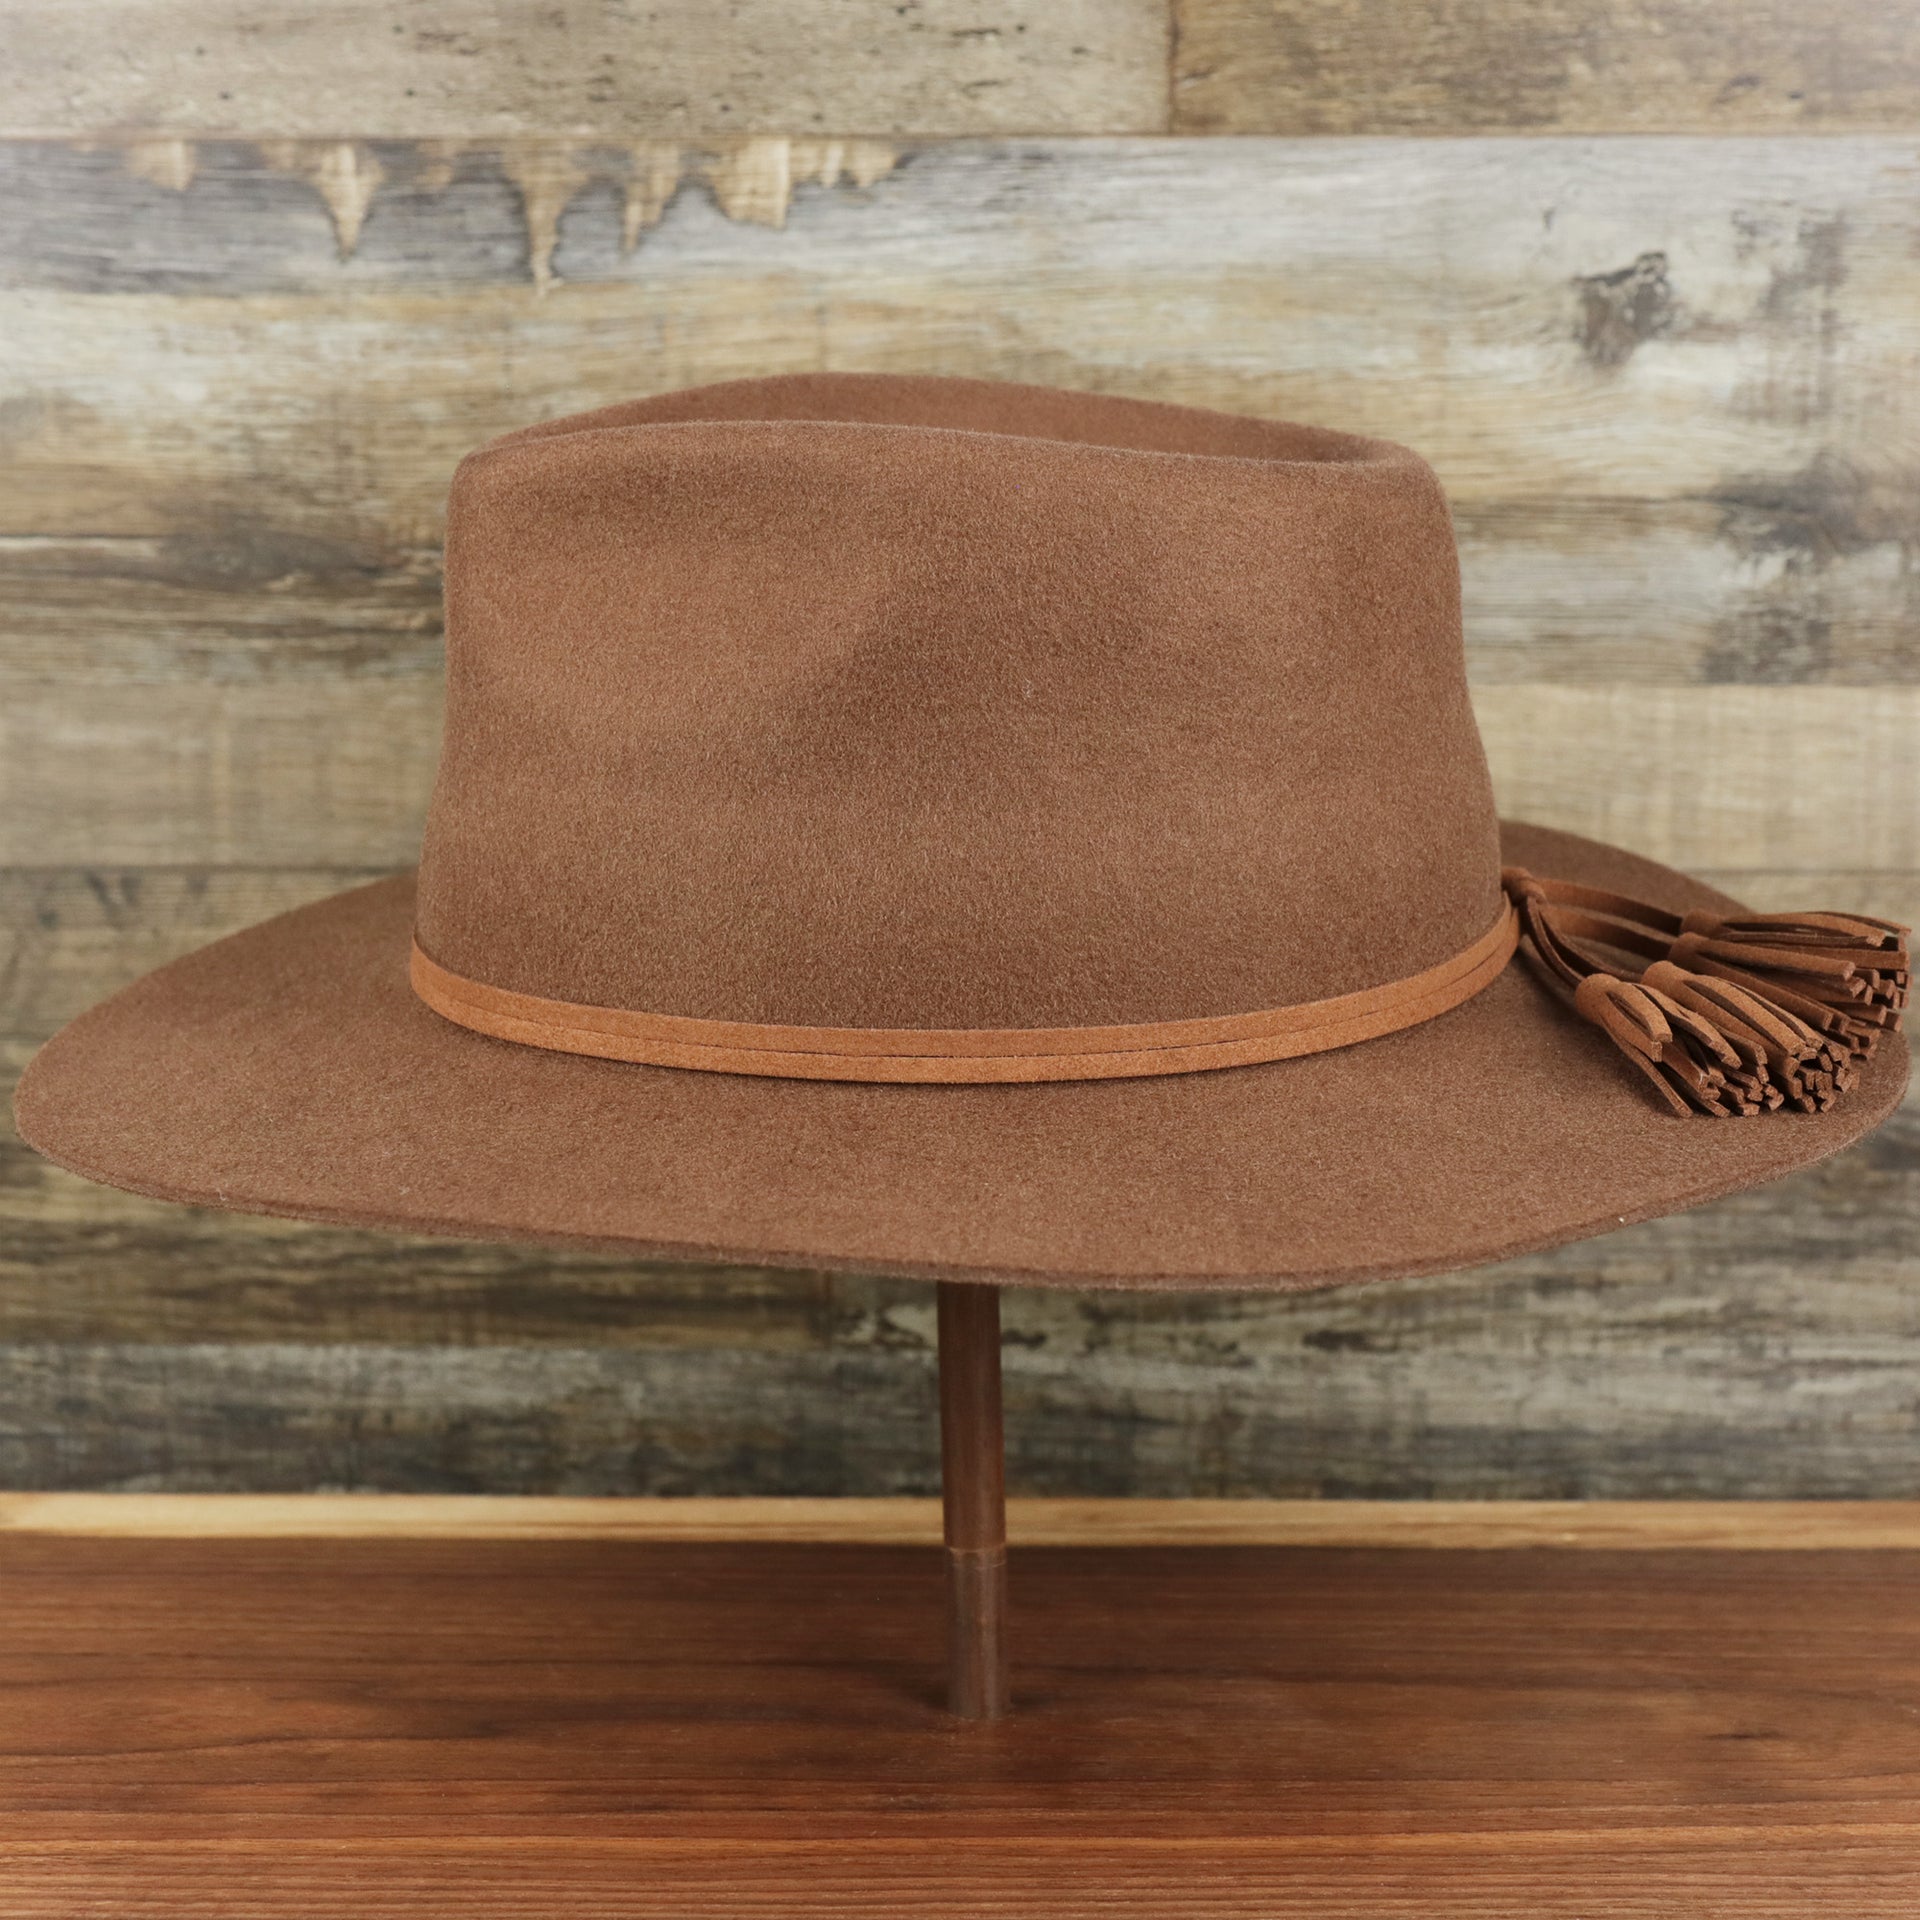 The side of the Wide Brim Ribbon Edge Brown Fedora Hat with Black Silk Interior | Zertrue 100% Australian Wool